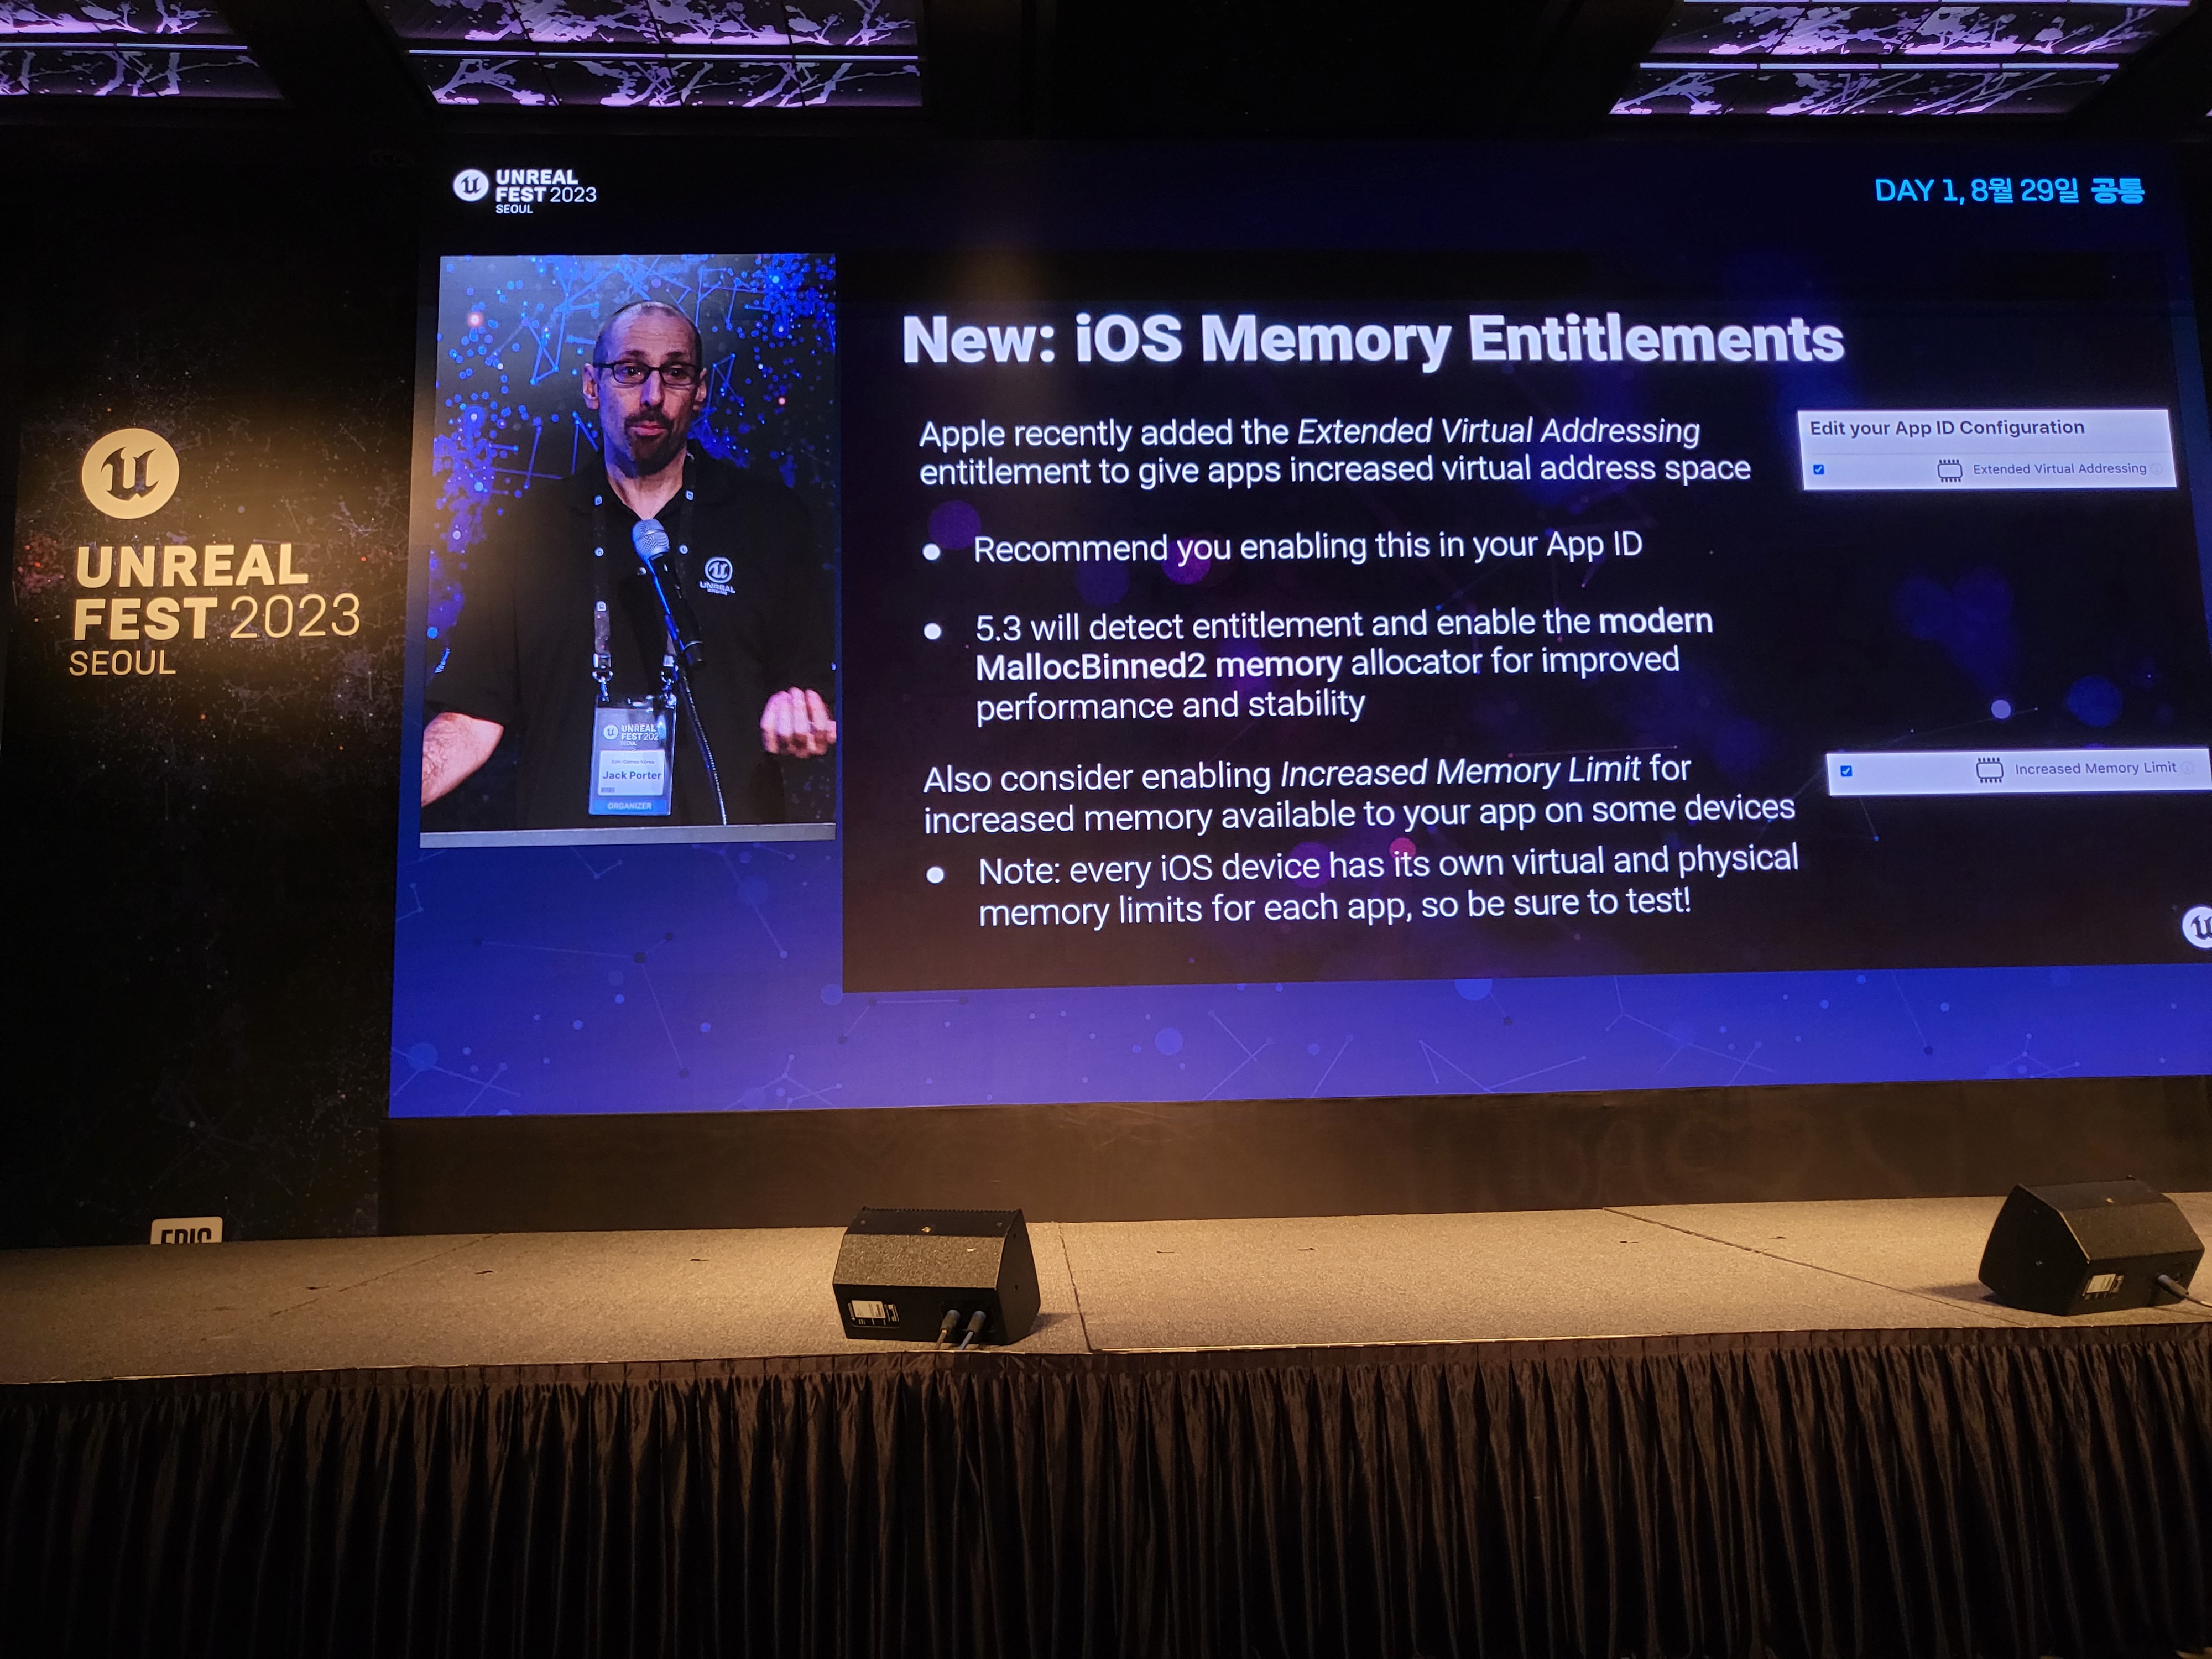 iOS Memory Entitlements